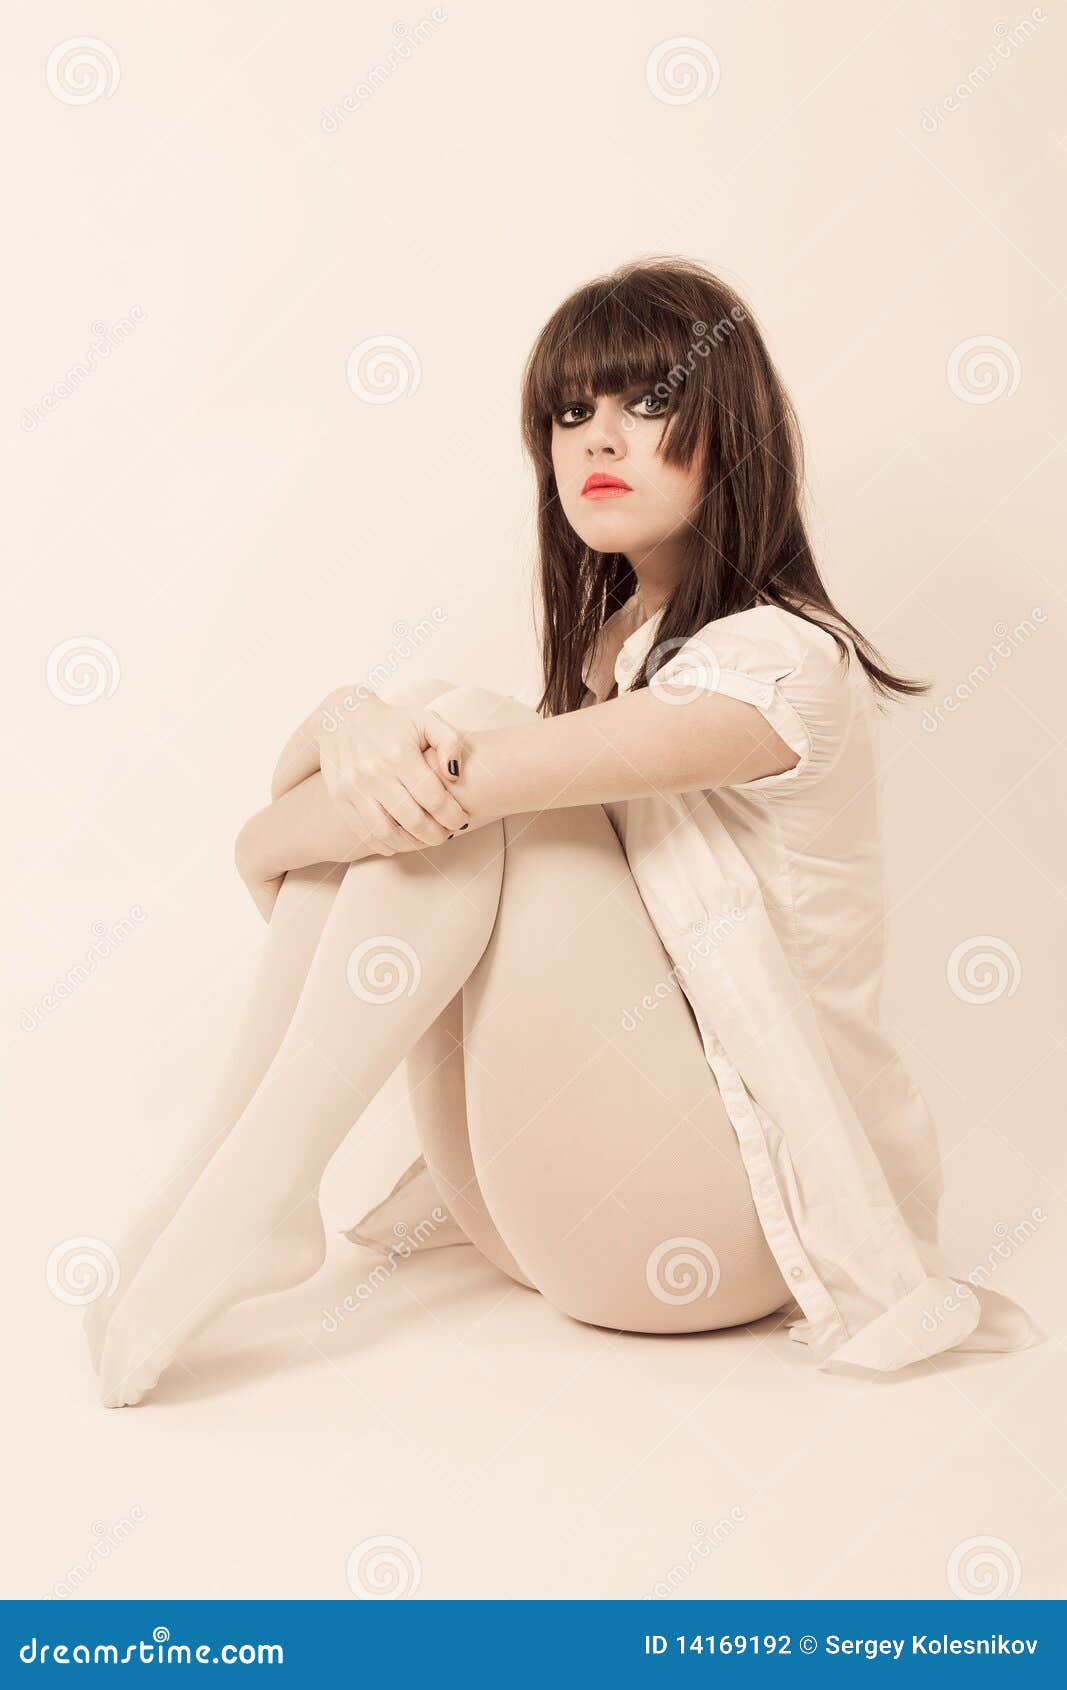 https://thumbs.dreamstime.com/z/young-beautiful-women-white-pantyhose-14169192.jpg